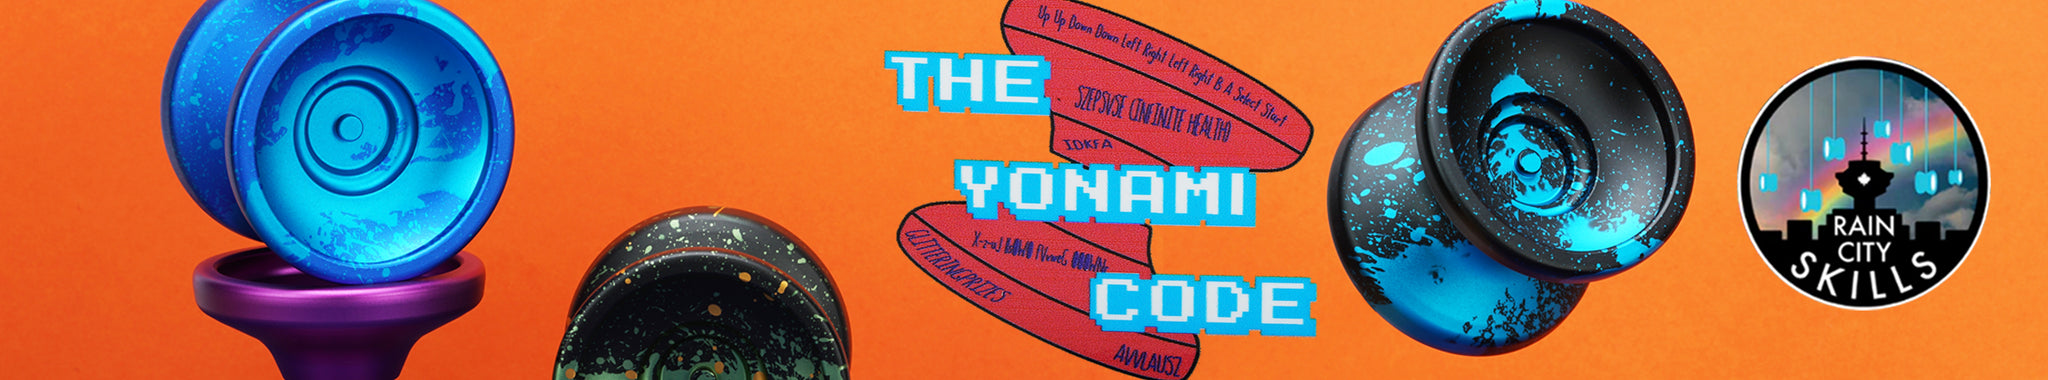 Yonami Code by Rain City